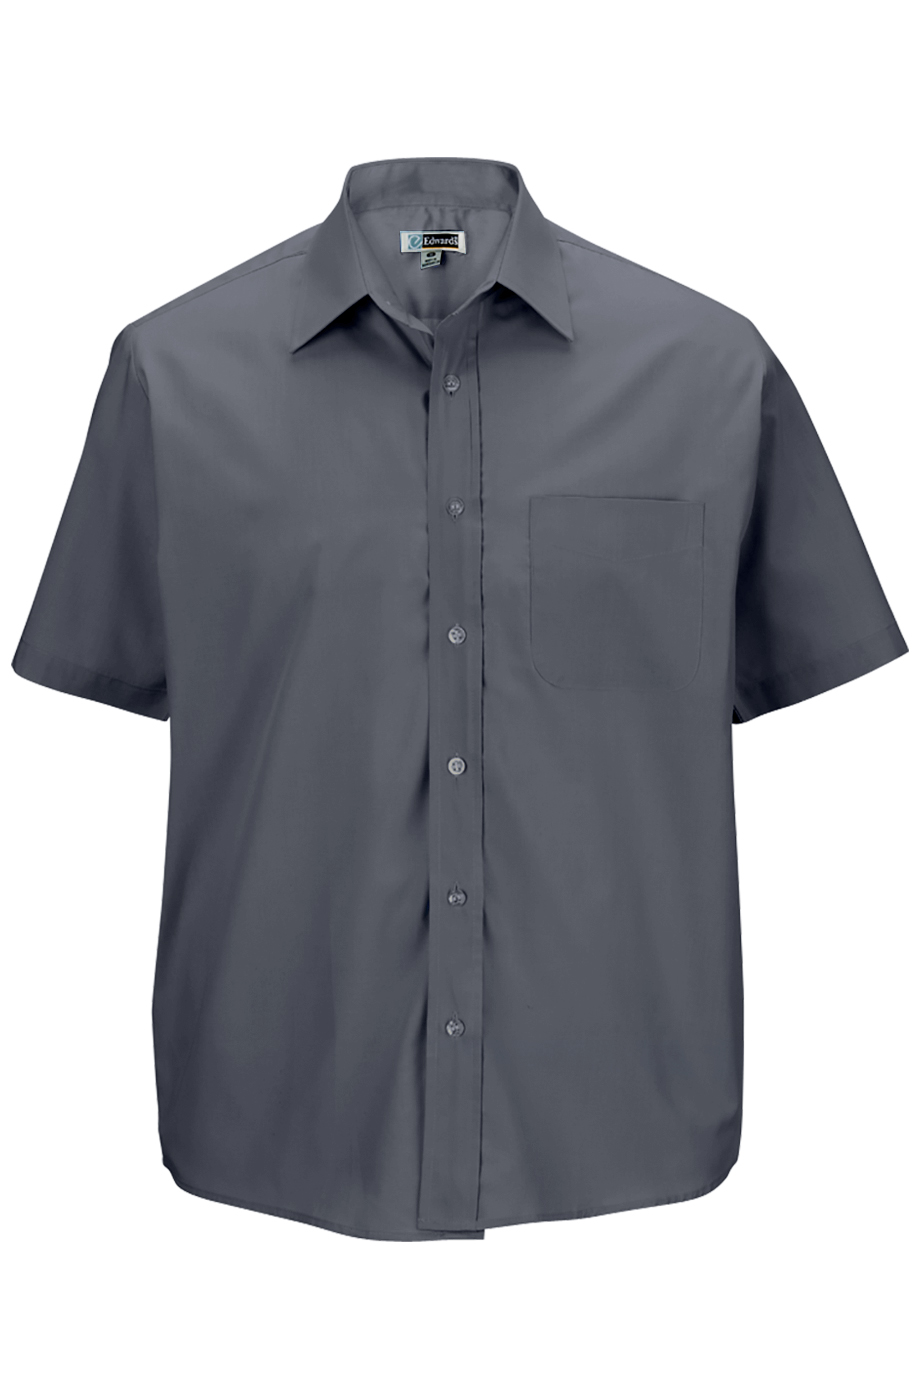 Men's Short Sleeve Value Broadcloth Shirt 1313